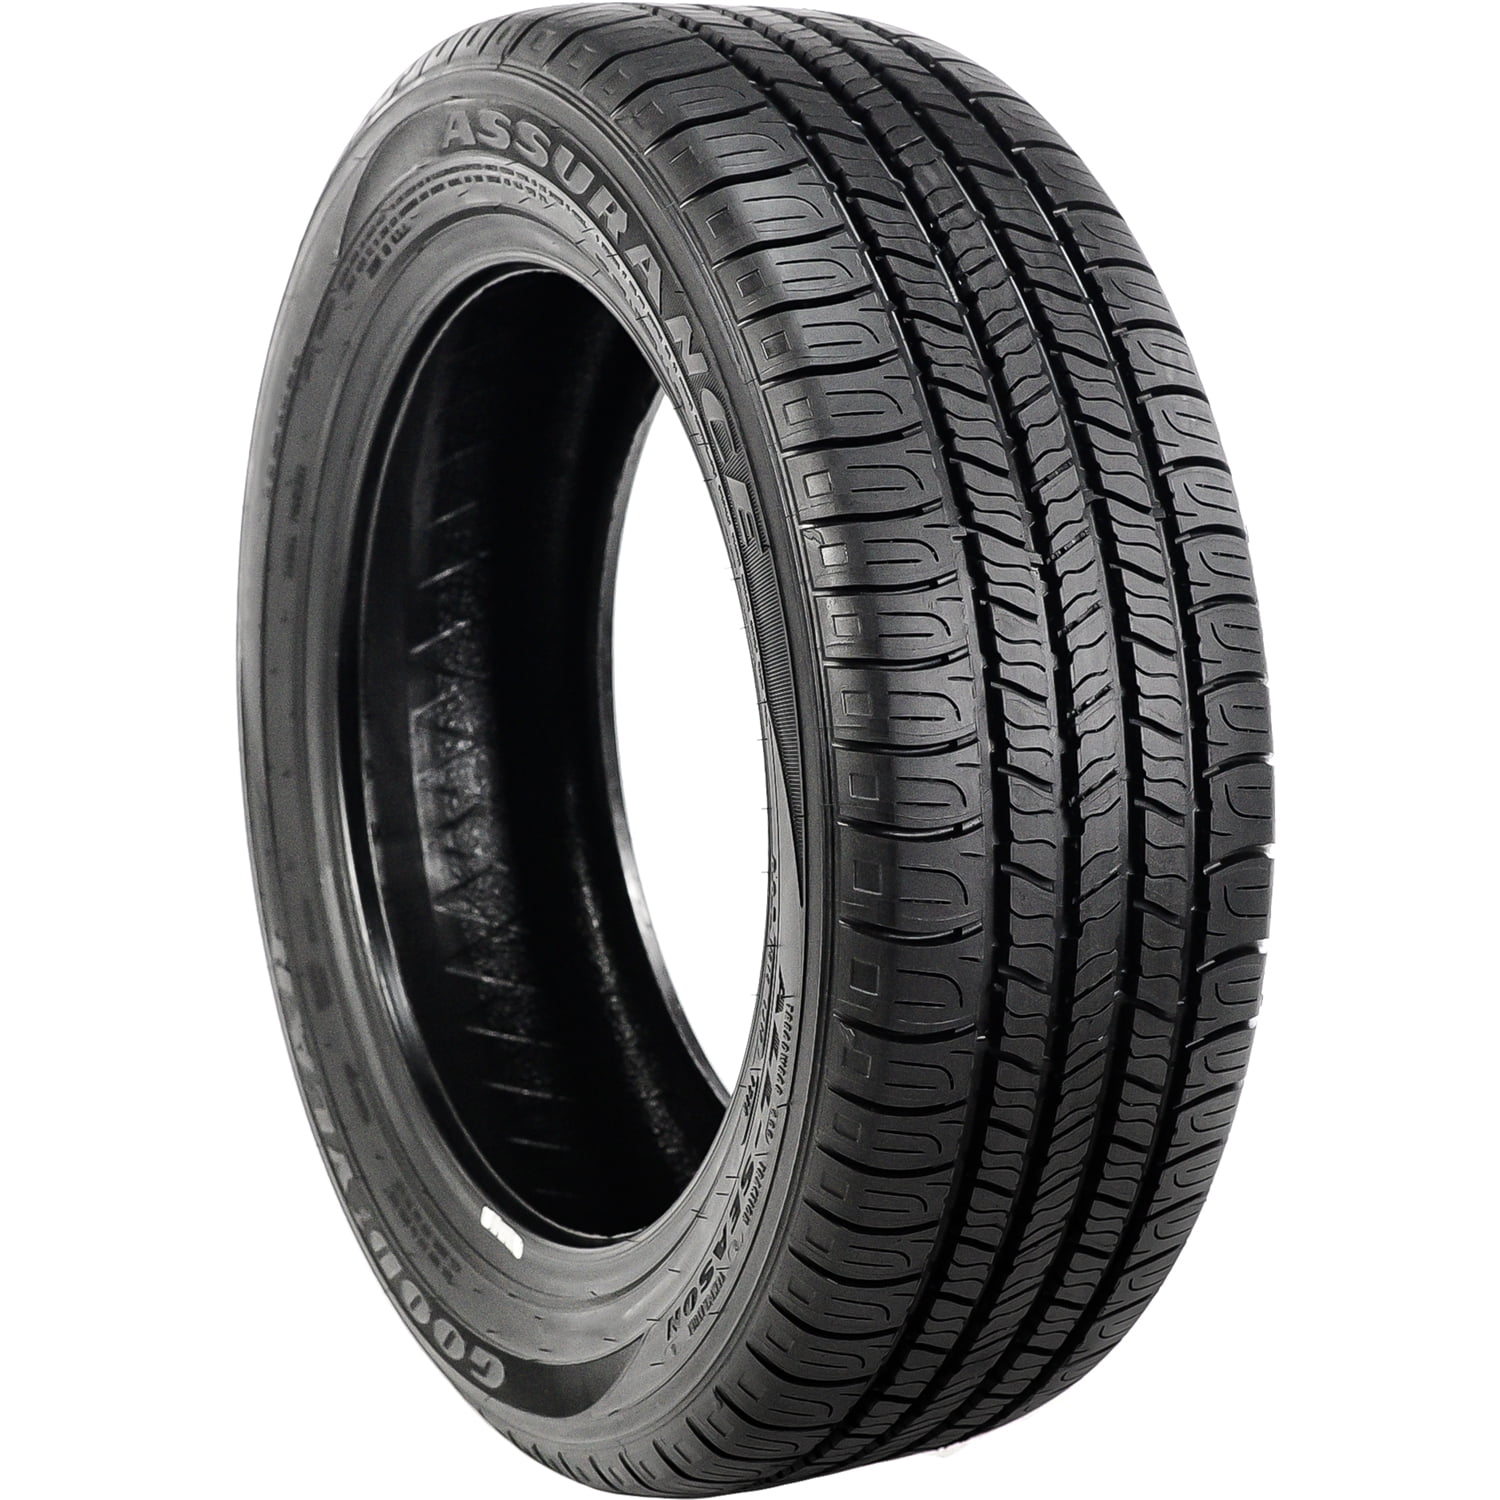 Goodyear Assurance 98 225/60R16 Tire All-Season T